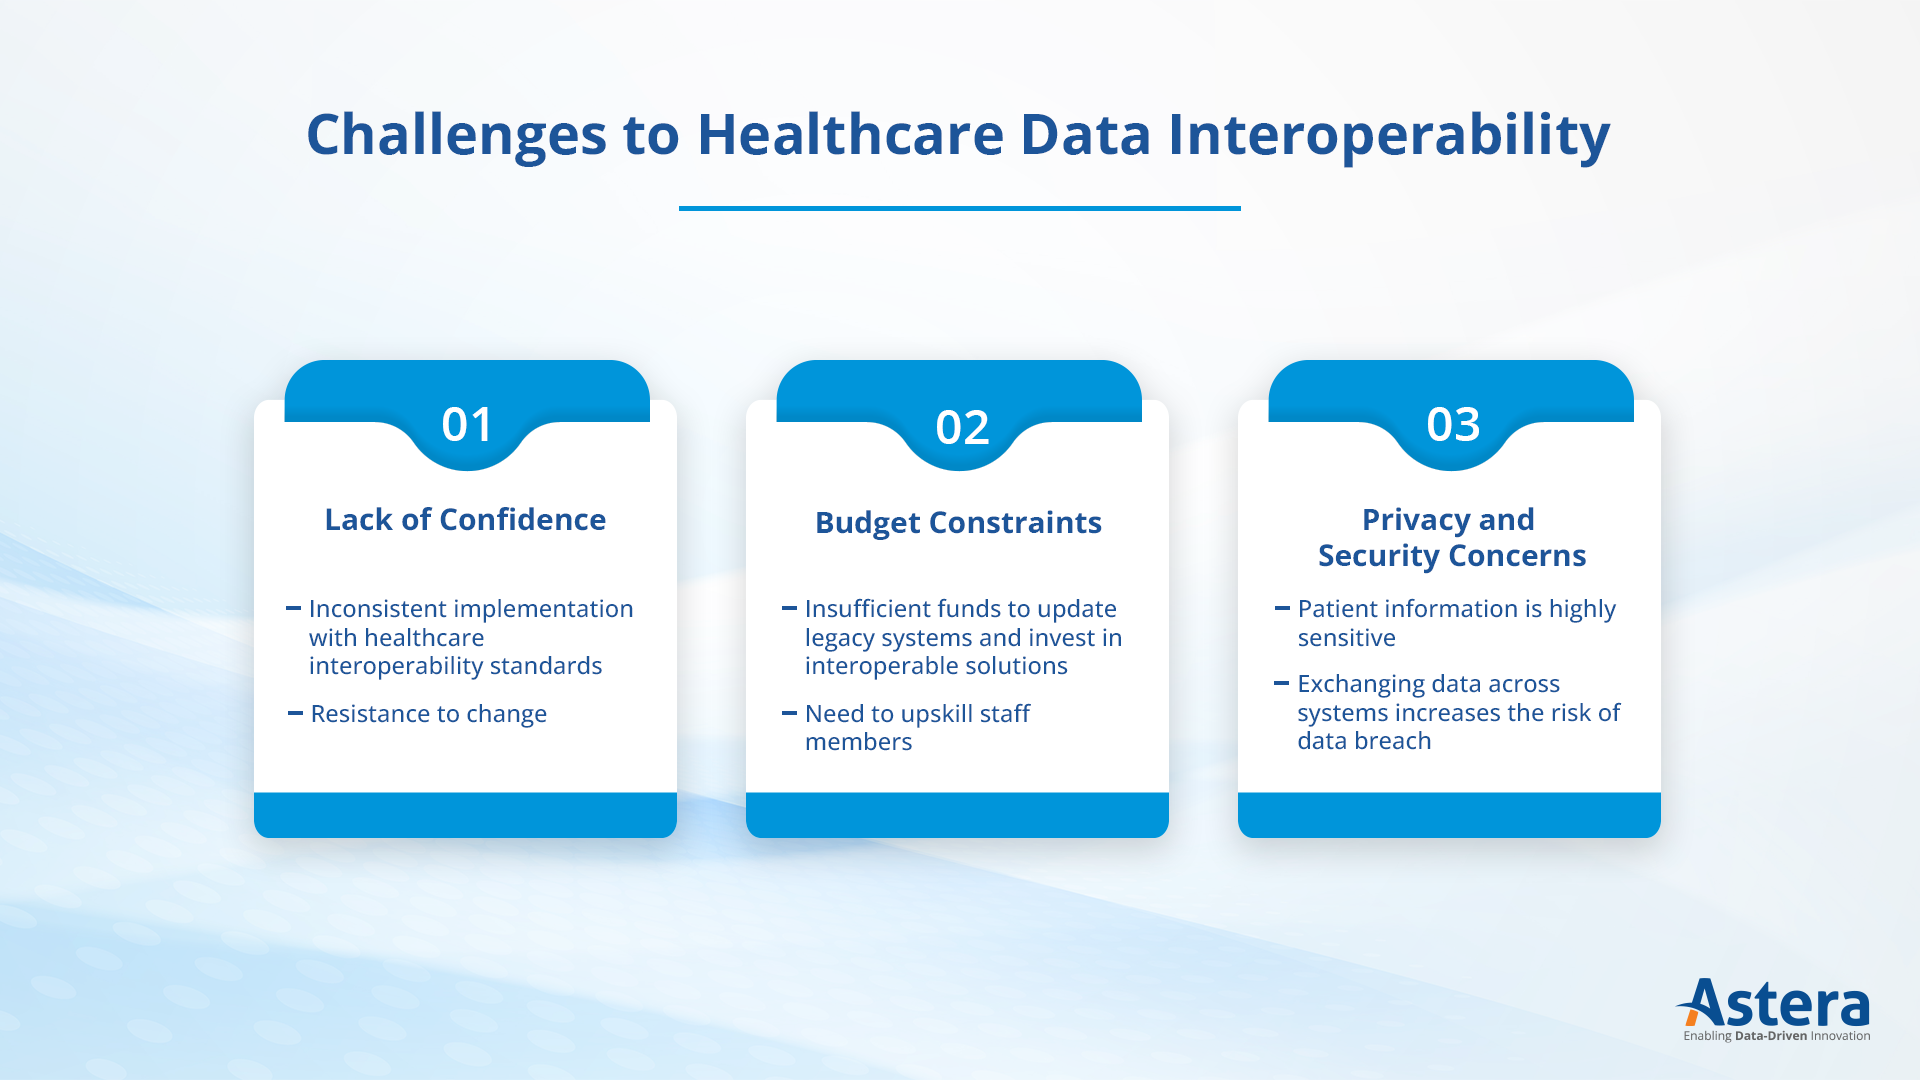 Challenges hindering healthcare data interoperability